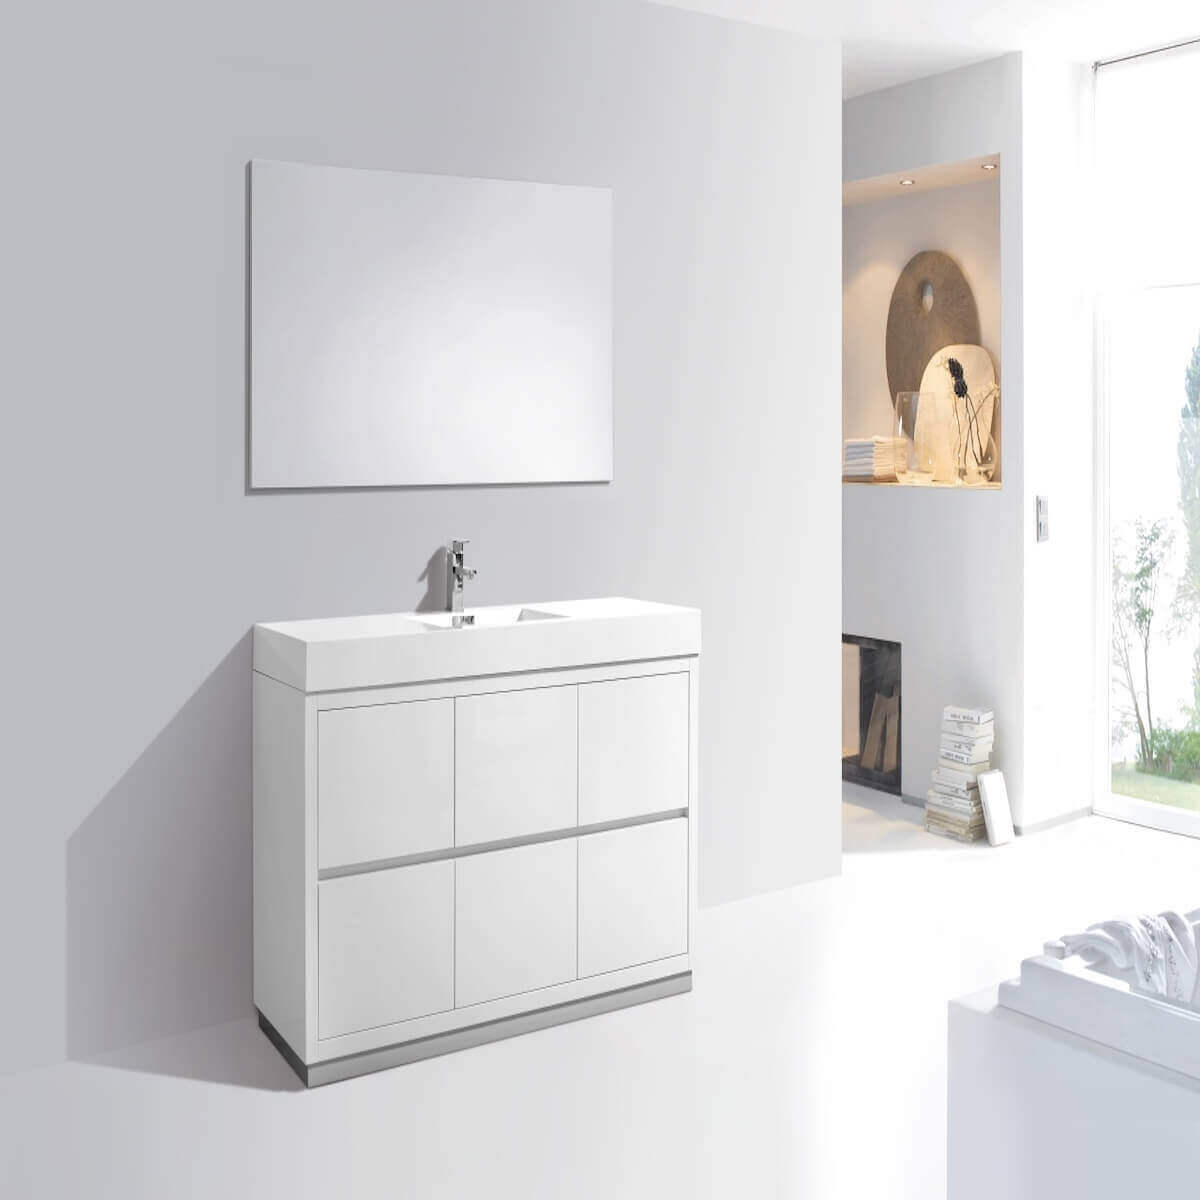 KubeBath Bliss 60" Gloss White Freestanding Single Vanity FMB60S-GW in Bathroom #finish_gloss white